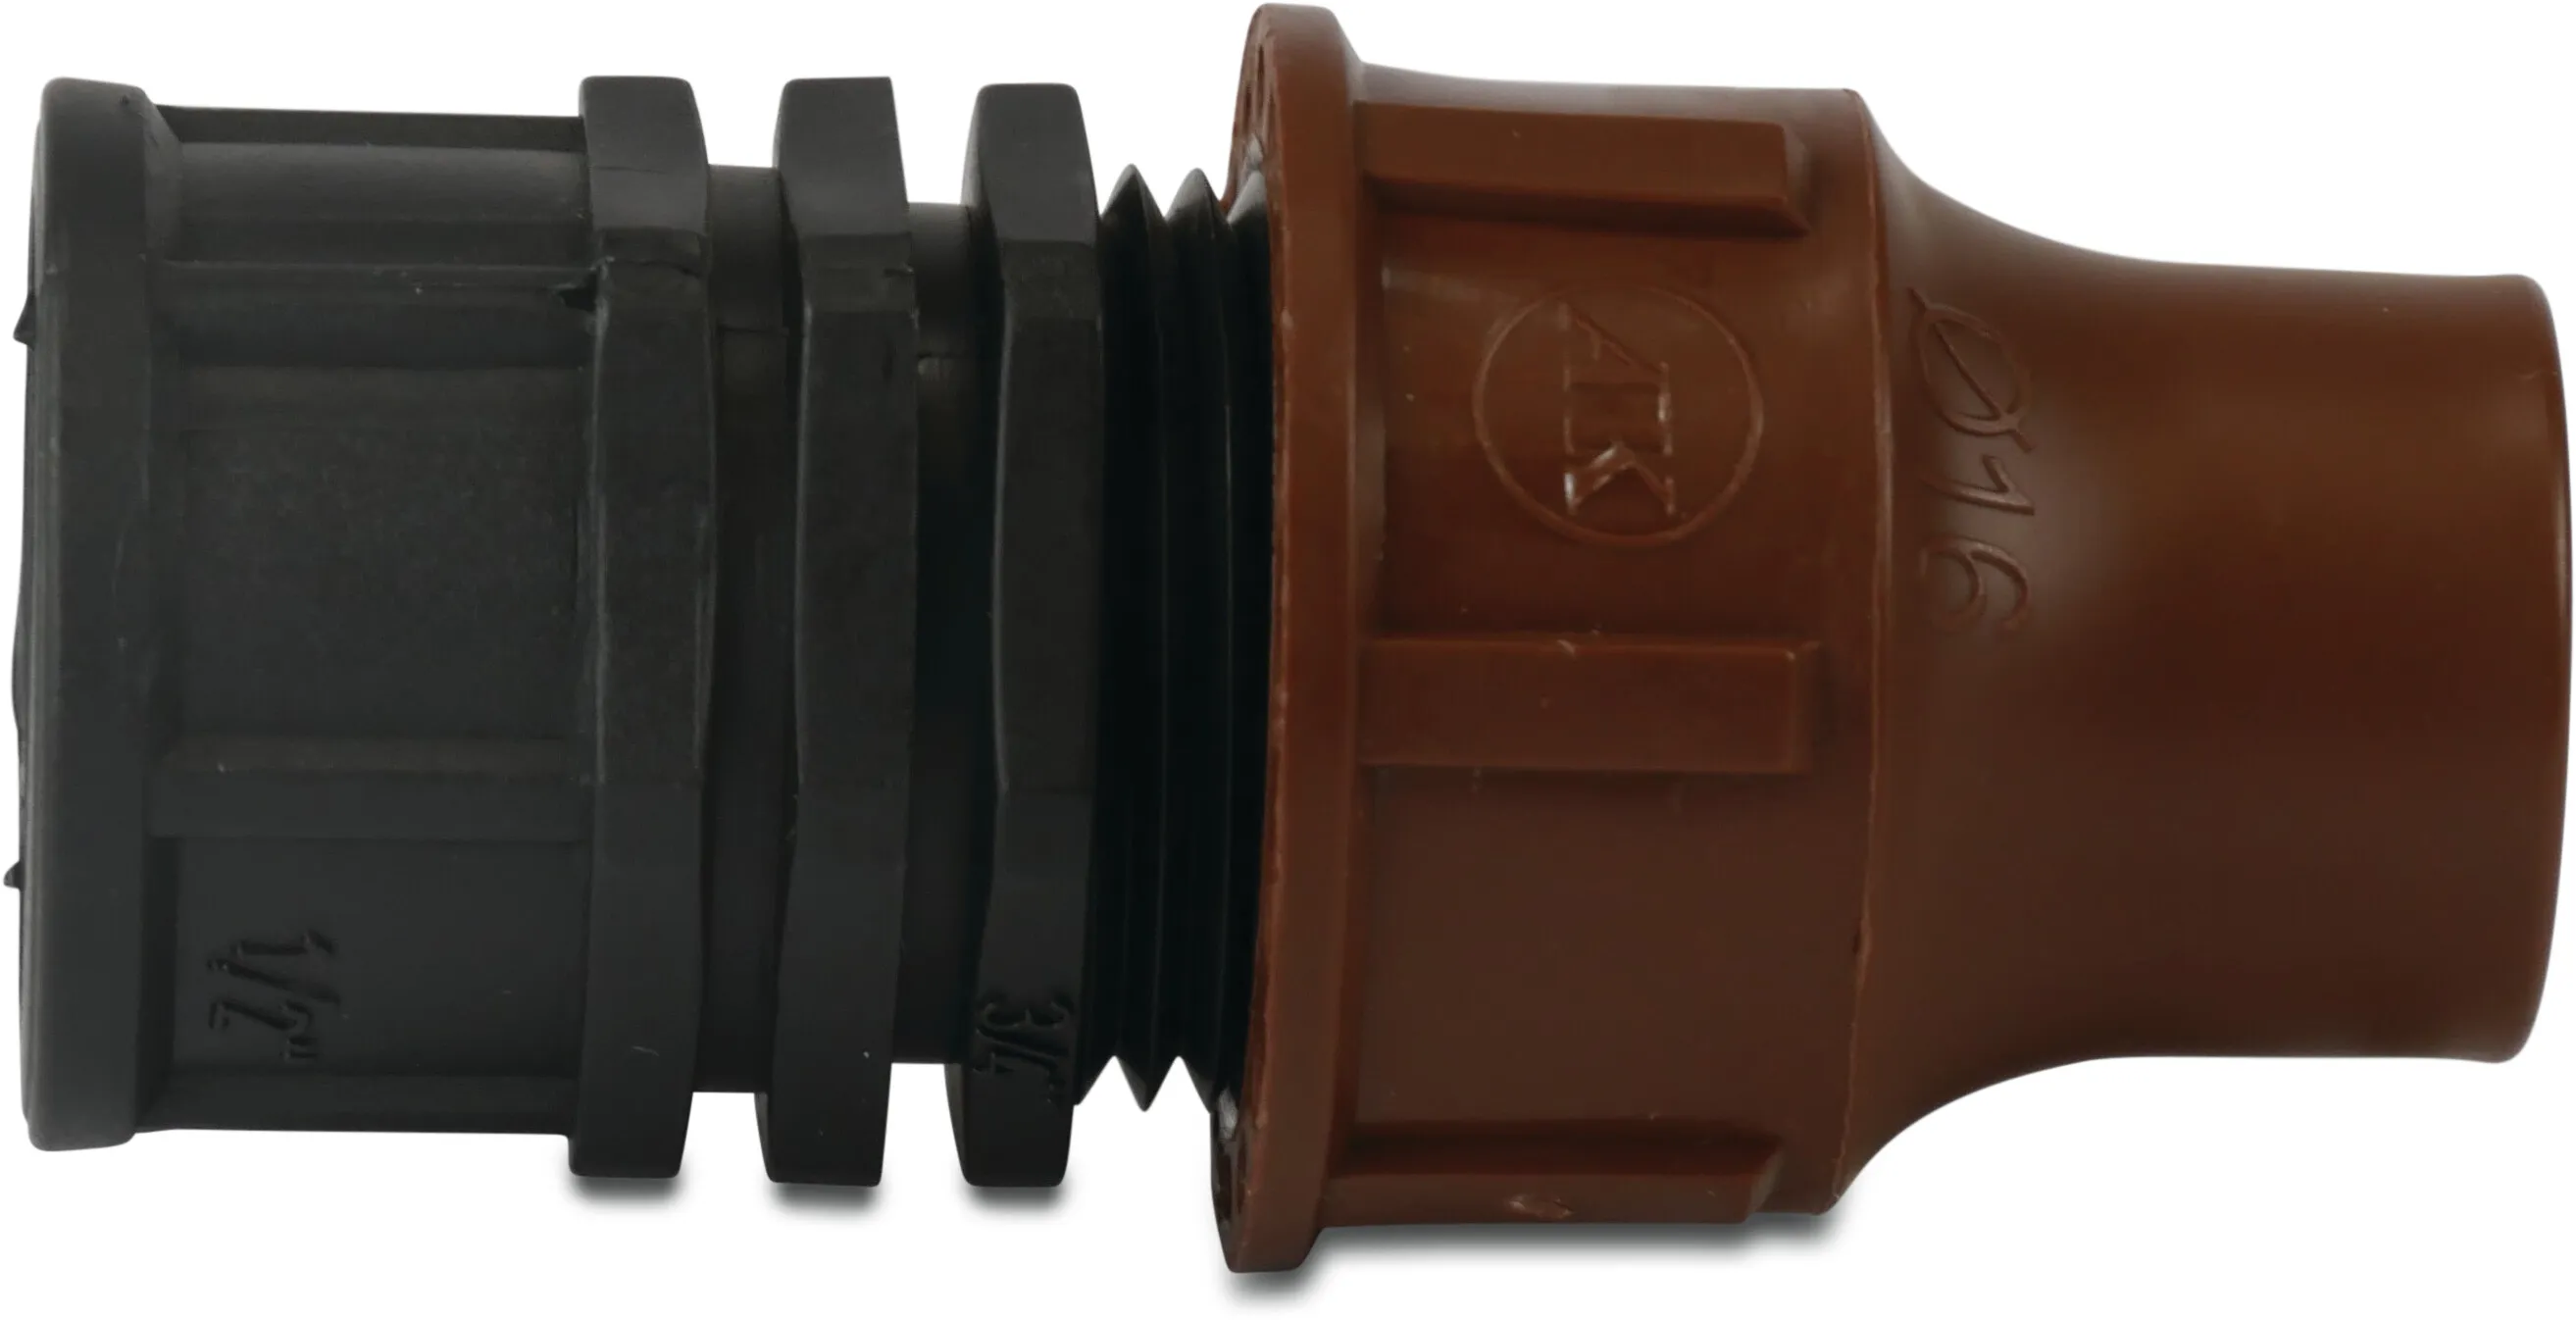 Adaptor PP 16 mm x 1/2" lock x female thread brown type BF-62-50 lock